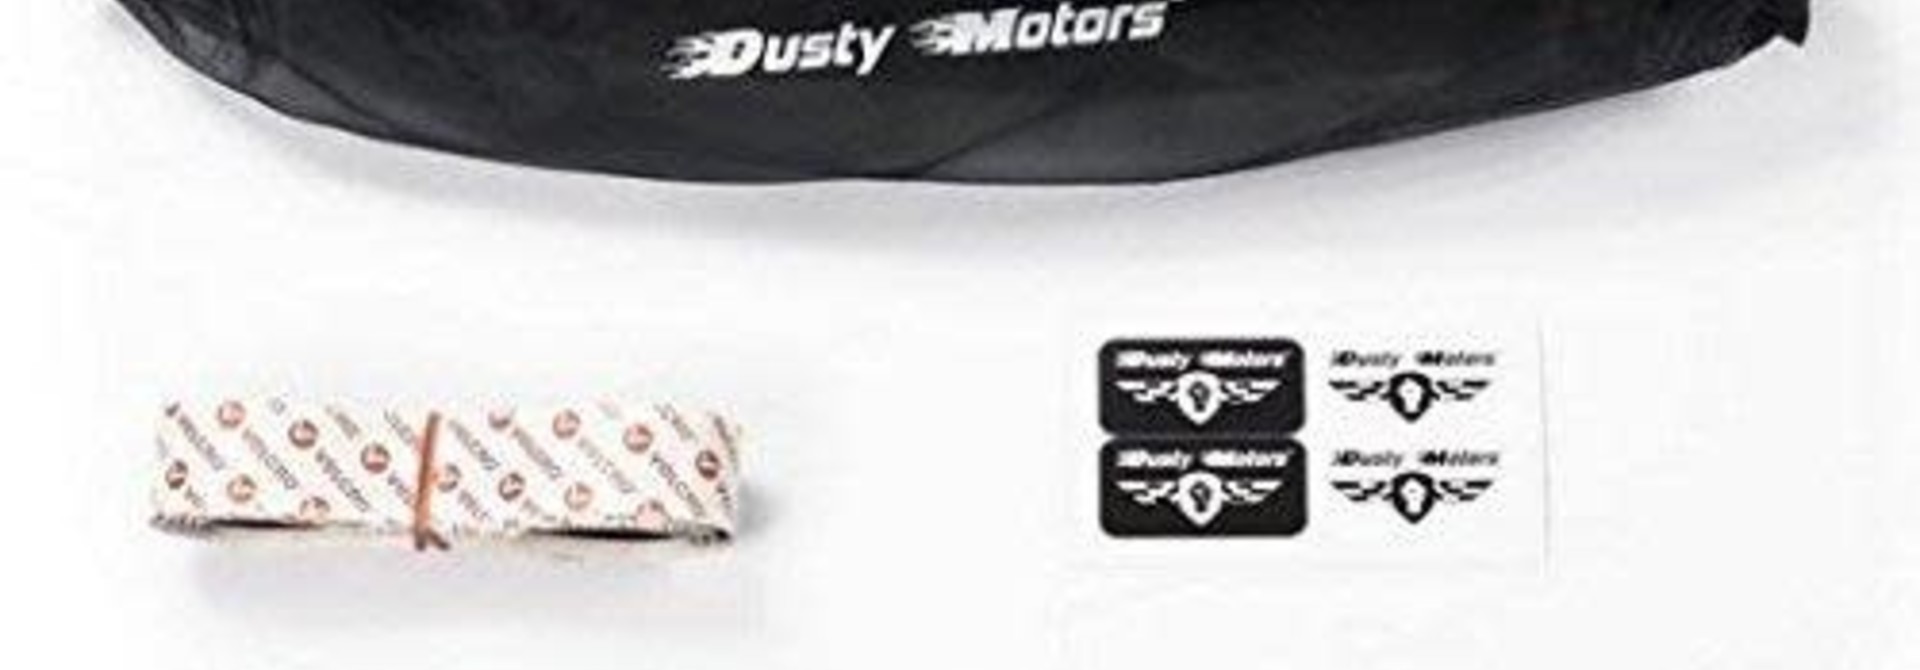 Dusty Motors Protection Cover for Arrma Senton 6S,  black, DMC2031